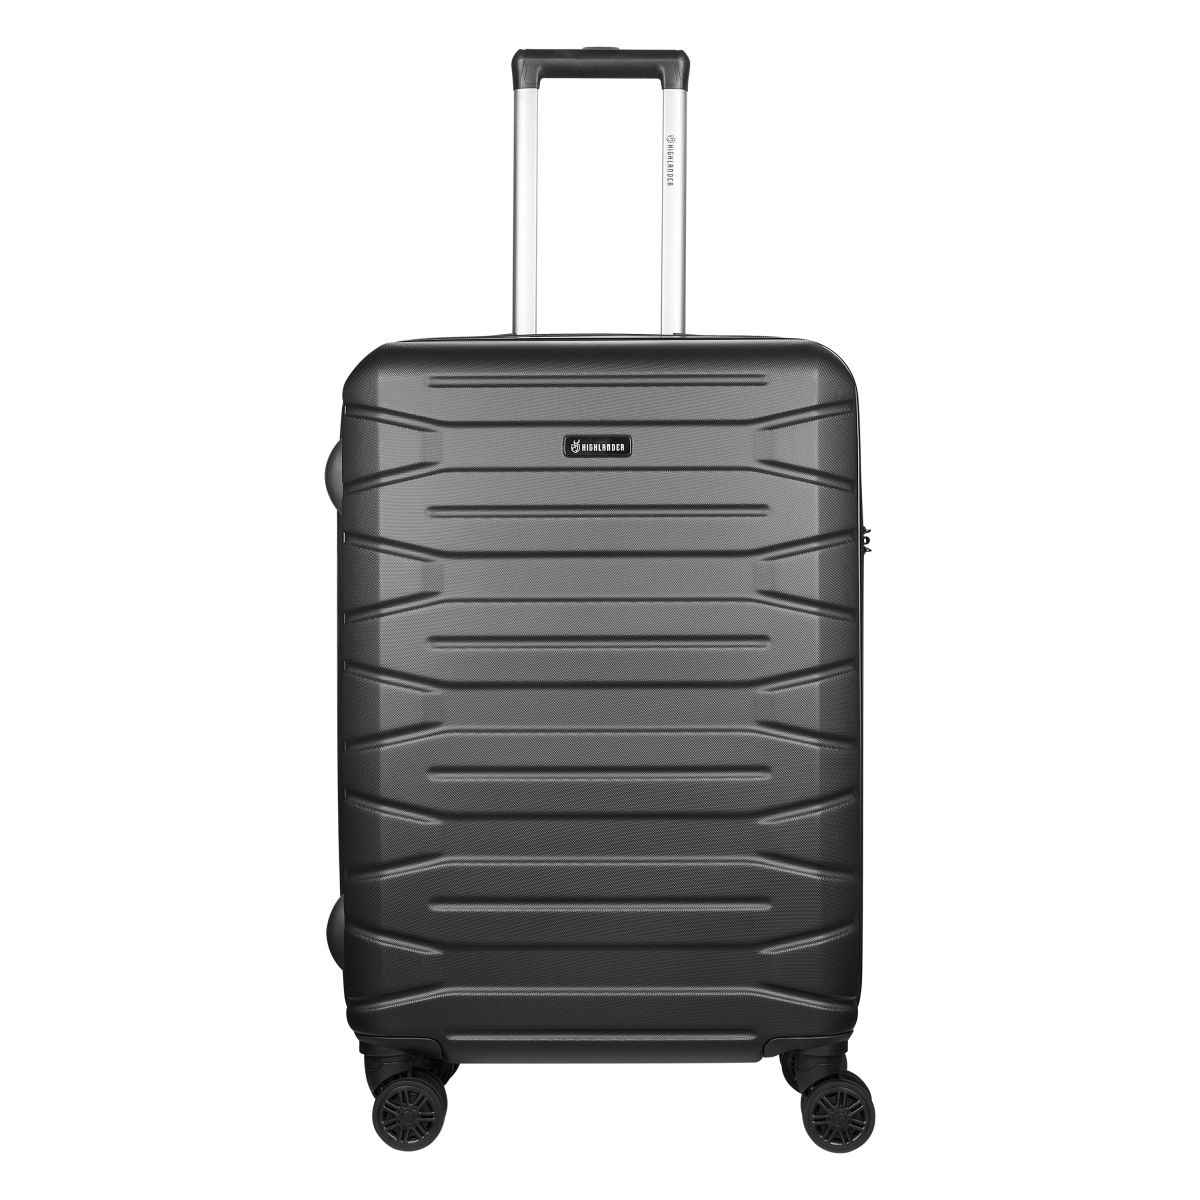 Highlander Travel Suitcase Hard Shell With Combo Lock - Cabana Series 65cm